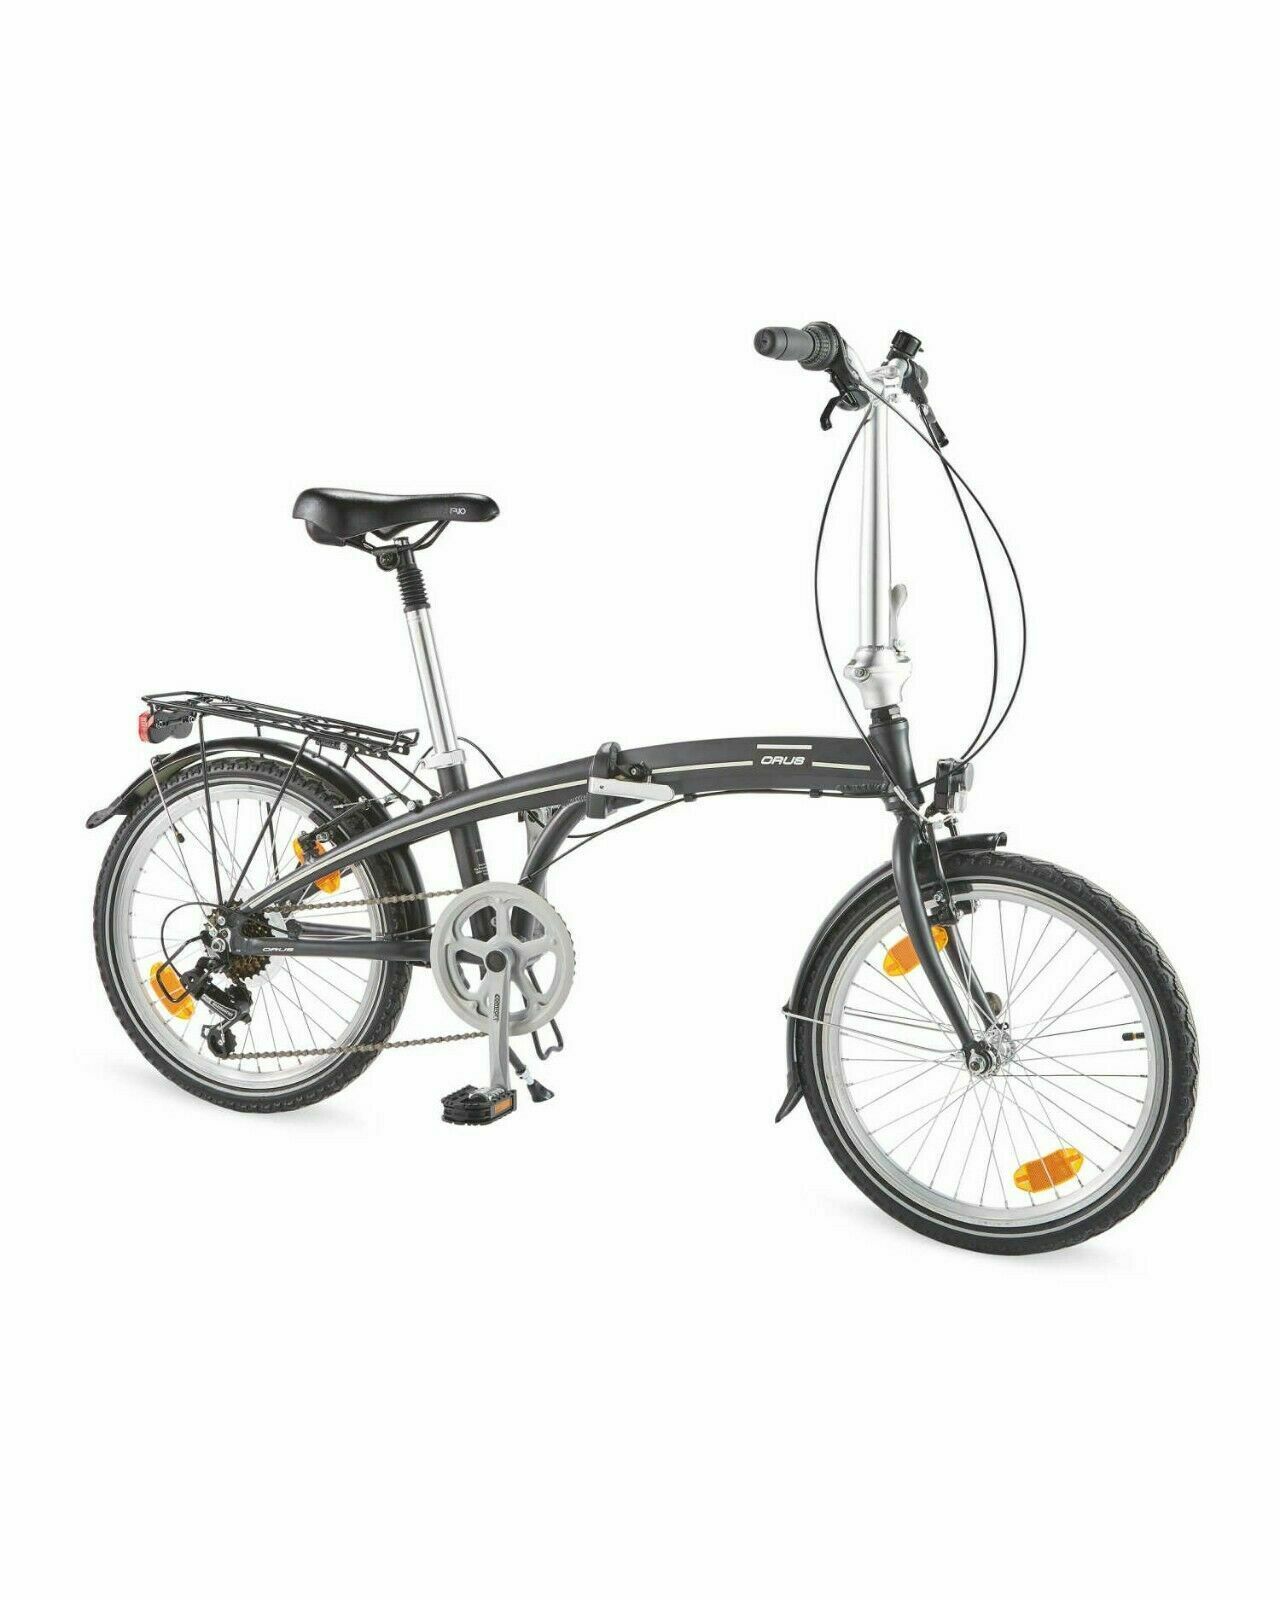 orus-20-50-cm-alloy-folding-adult-bike-frame-mechanism-7-speed-gear